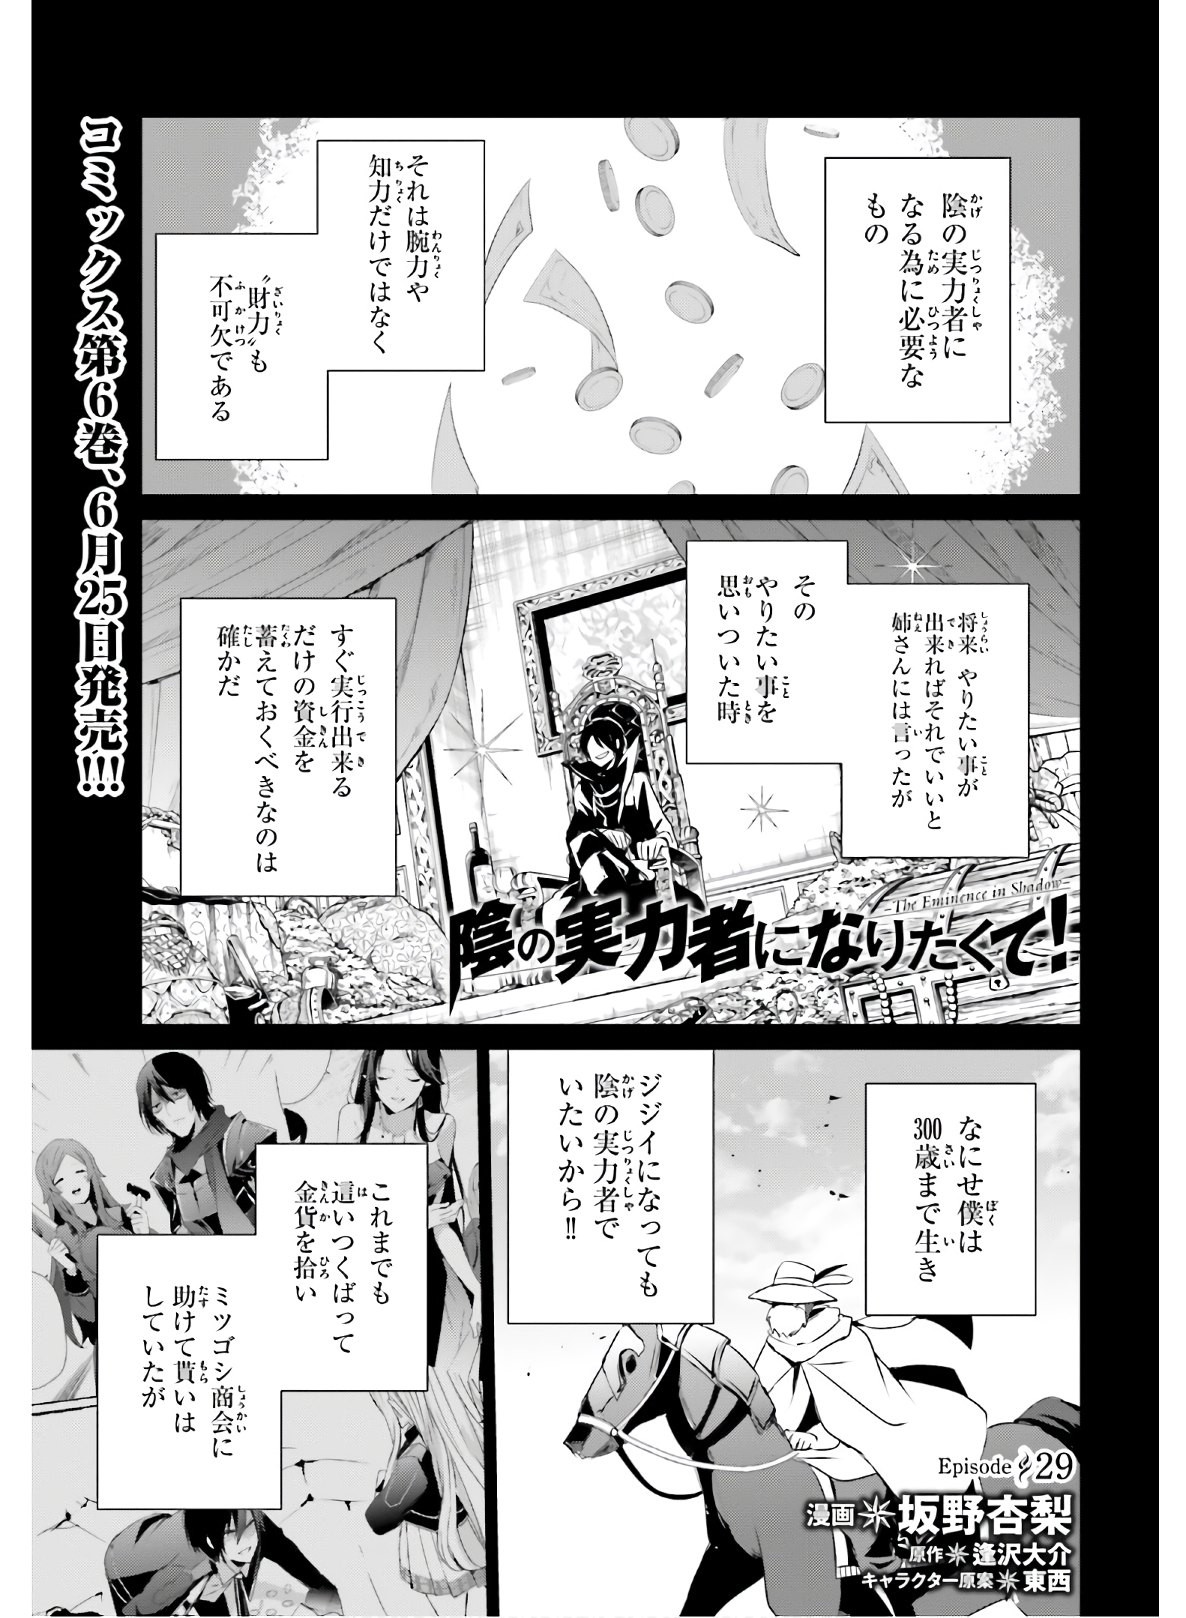 Kage no Jitsuryokusha ni Naritakute! - Chapter 29 - Page 1